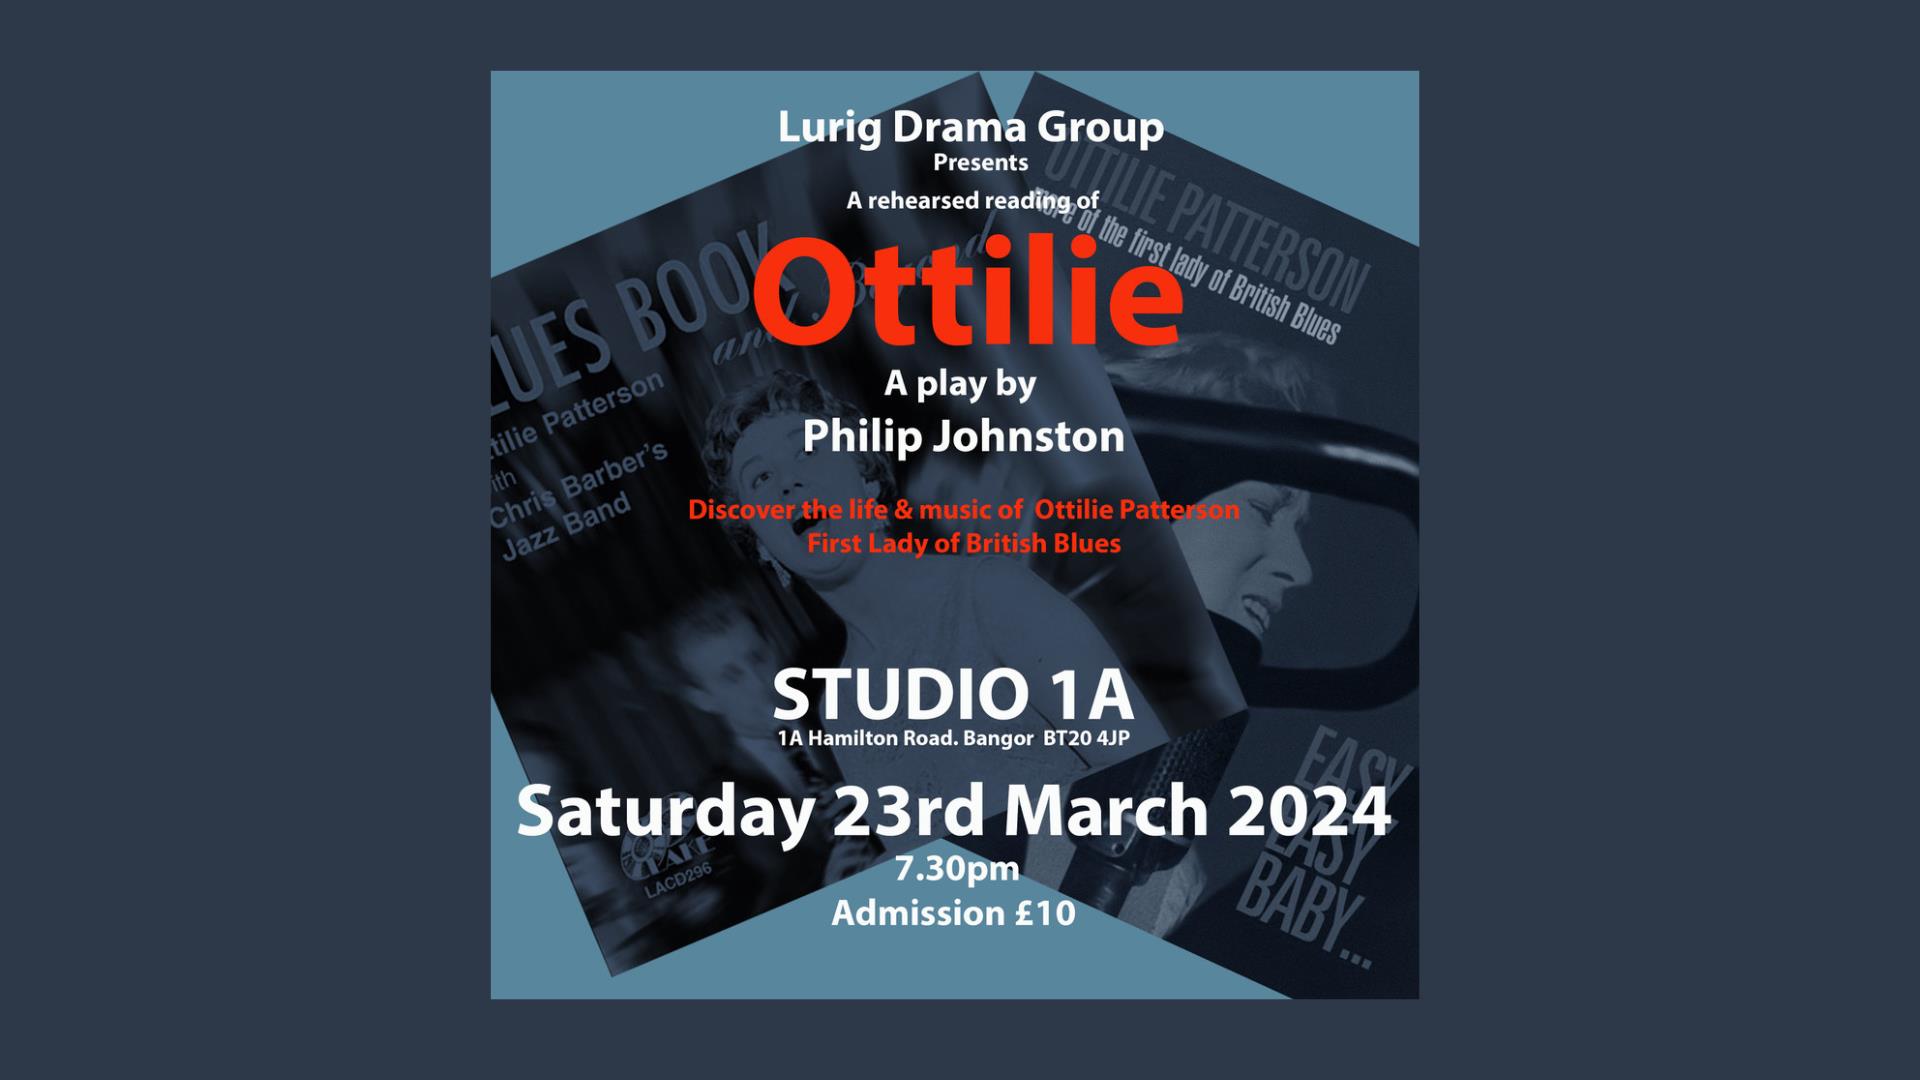 Promotional poster for Ottilie